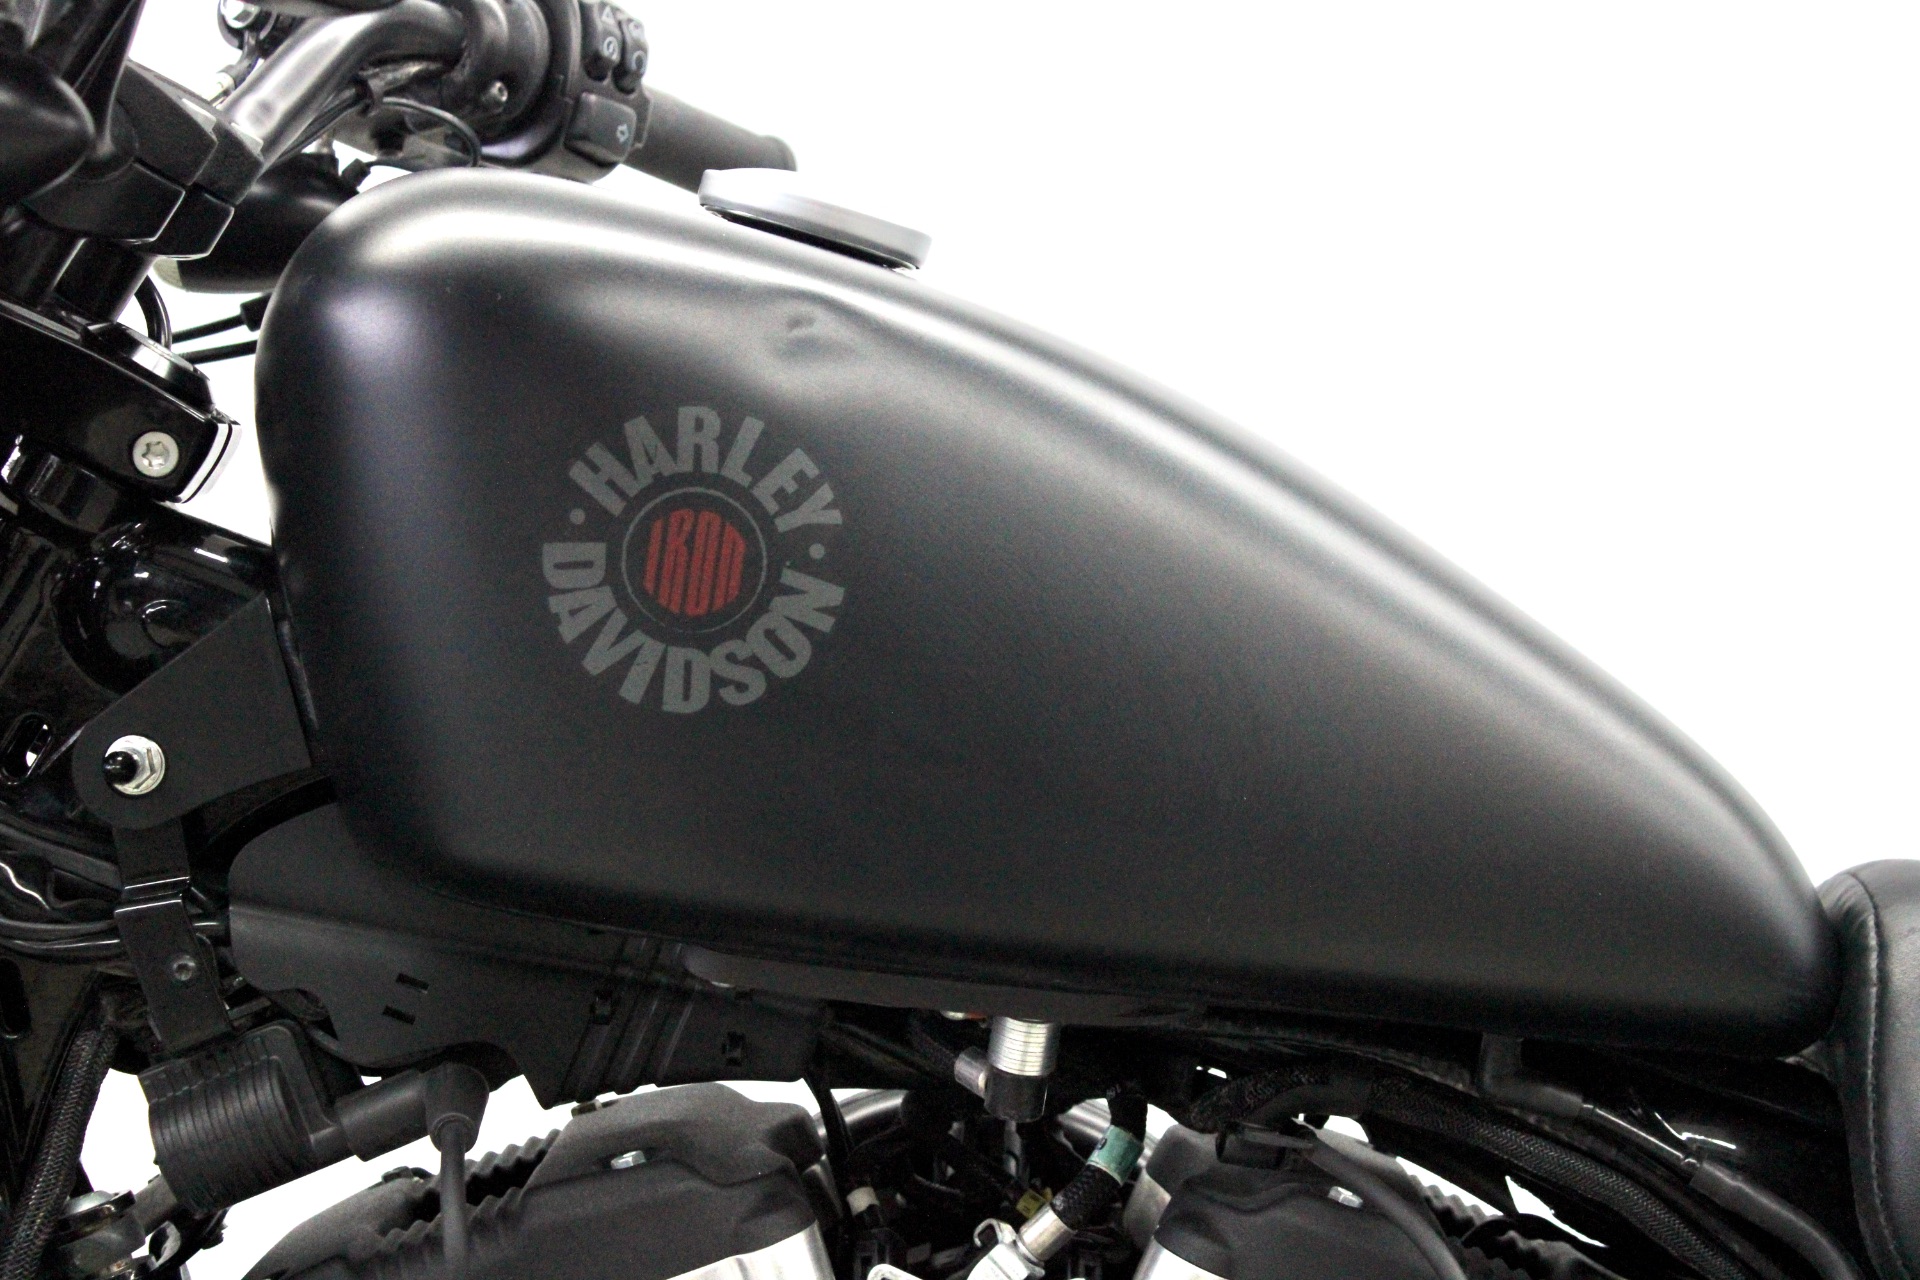 2021 Harley-Davidson Iron 883™ in Fredericksburg, Virginia - Photo 18